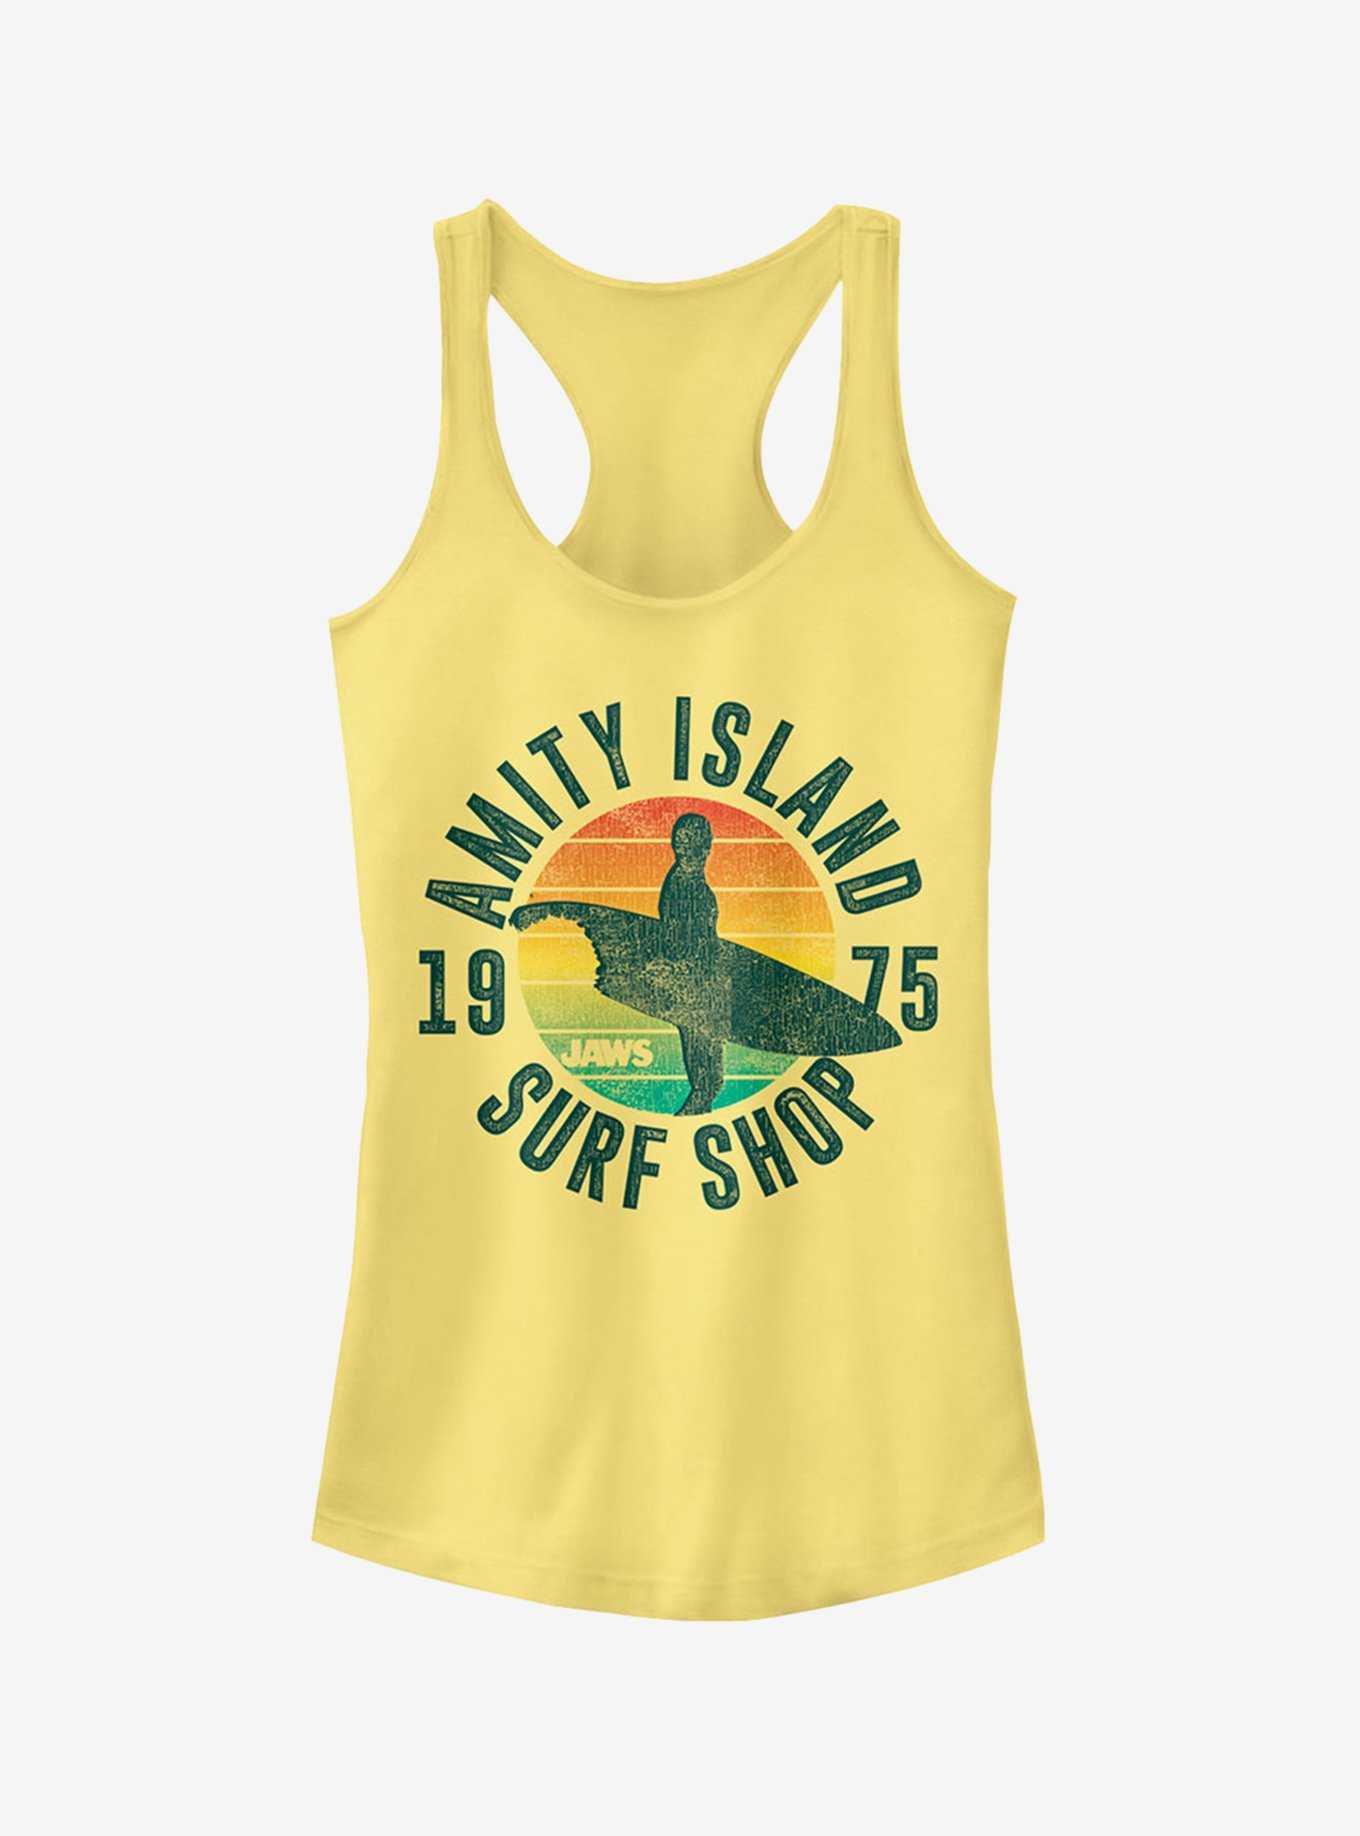 Retro Amity Island Surf Shop Girls Tank, , hi-res